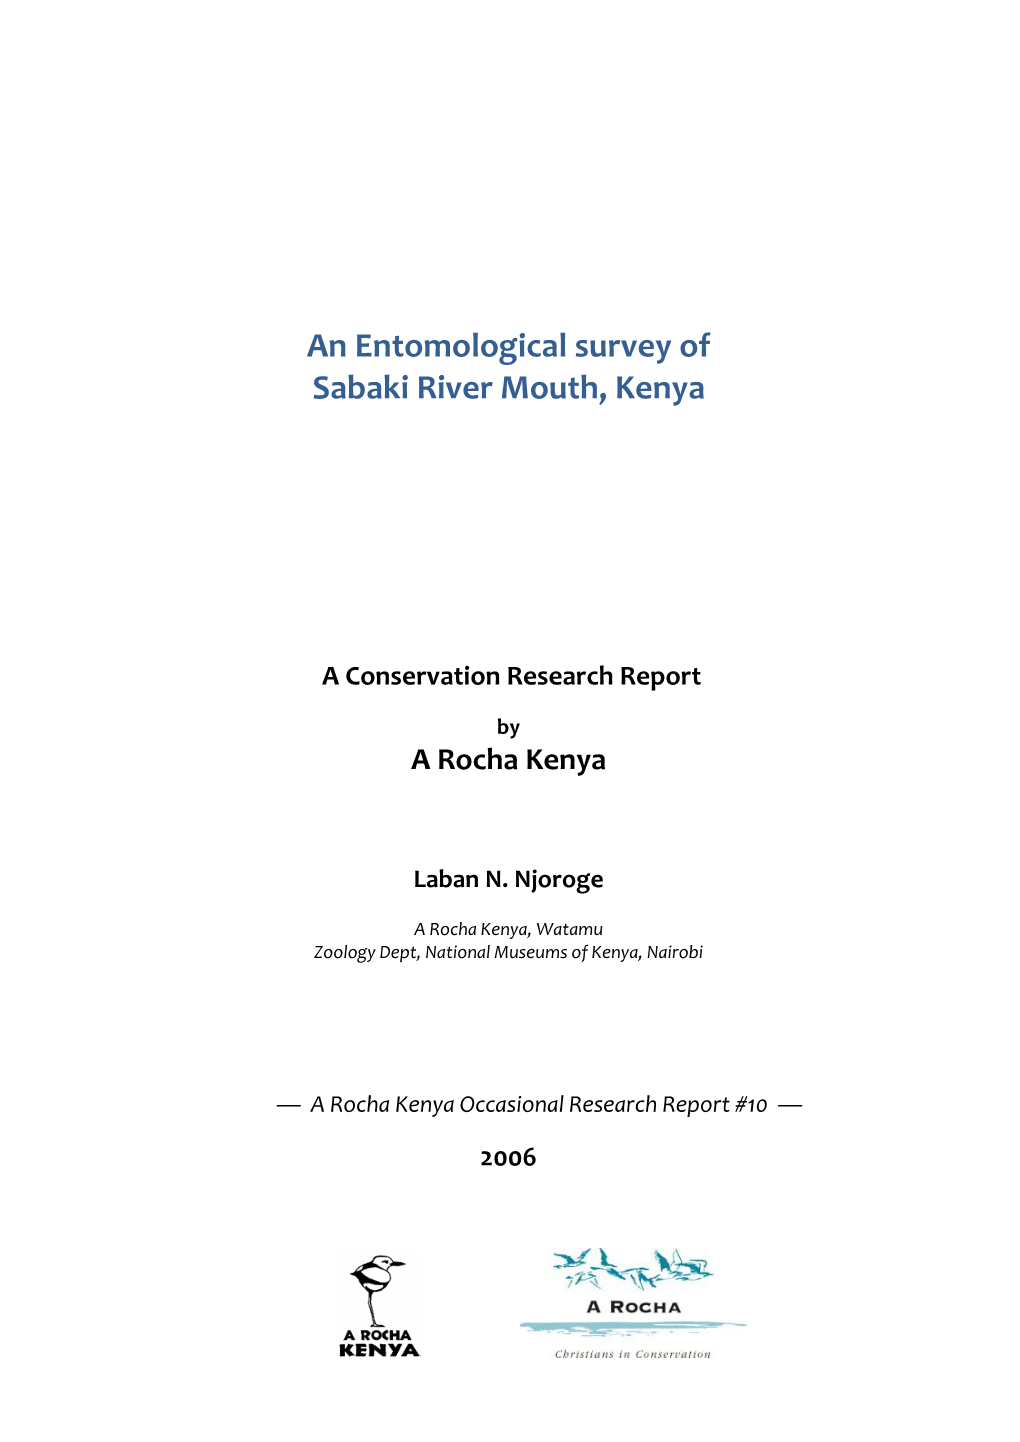 An Entomological Survey of Sabaki River Mouth, Kenya